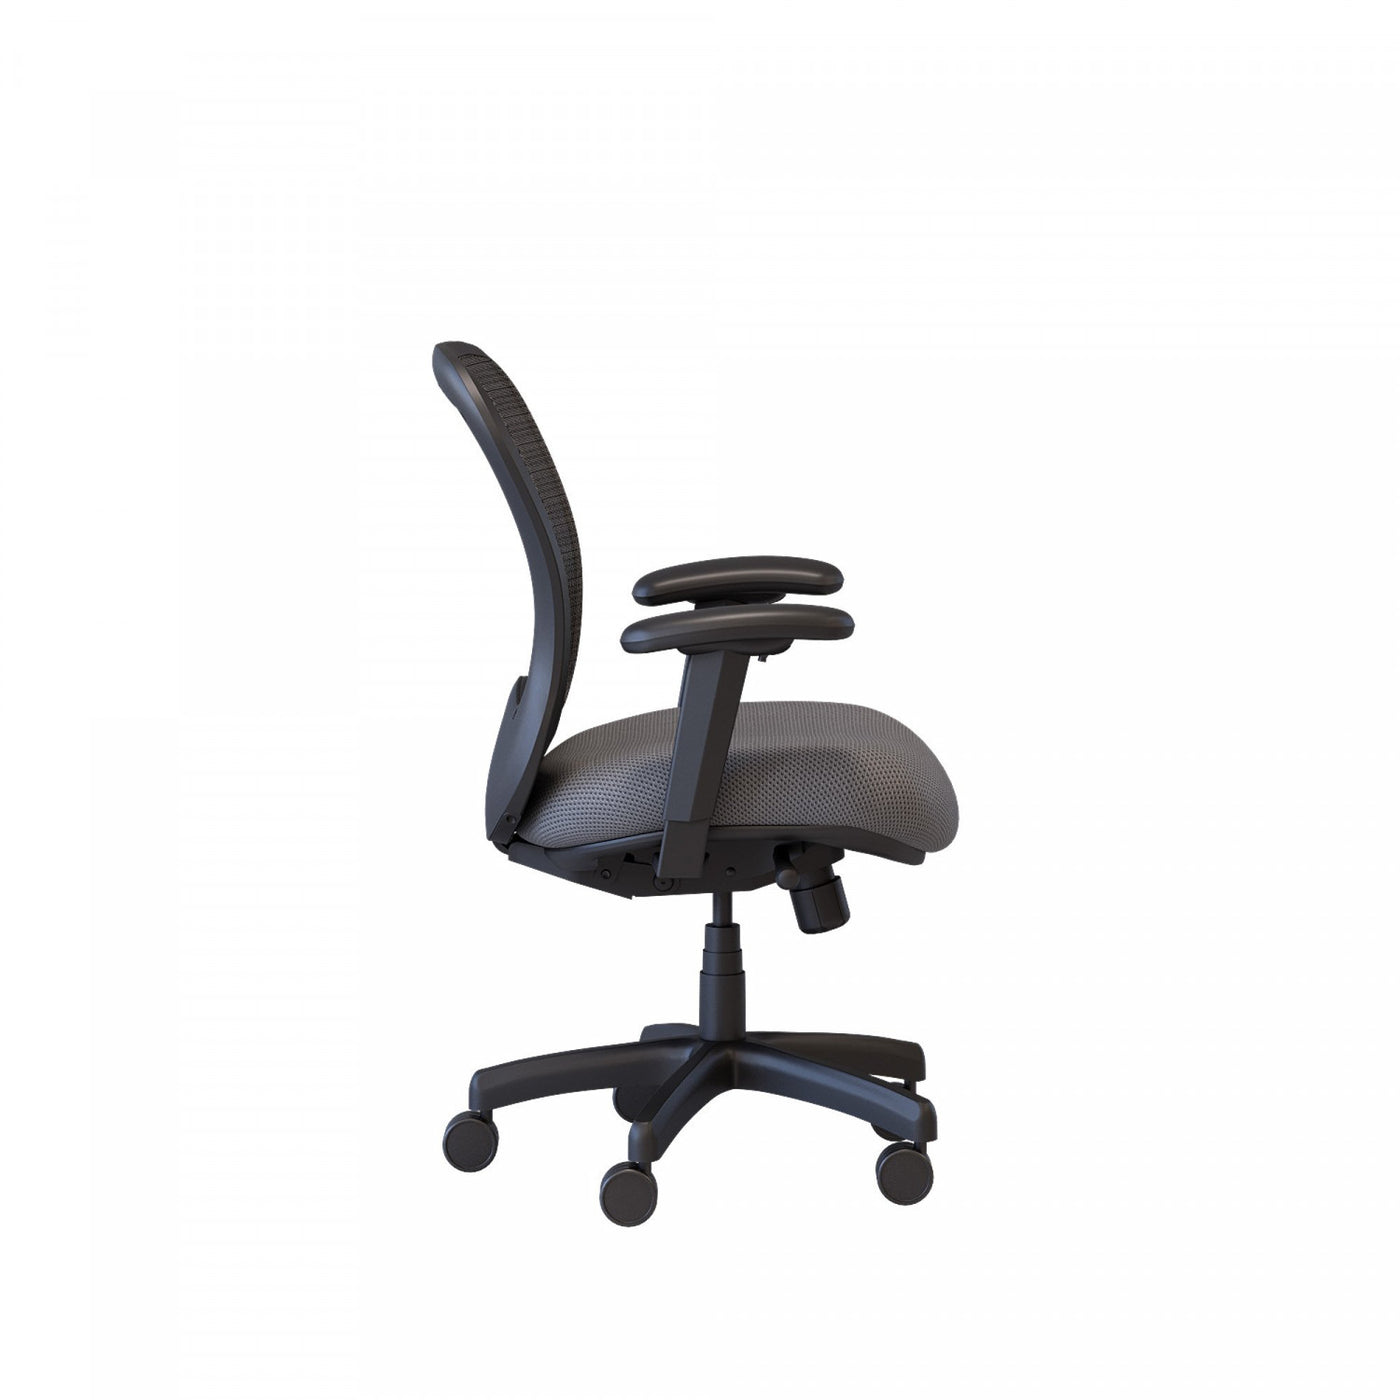 Elijah Office Chair - Grey